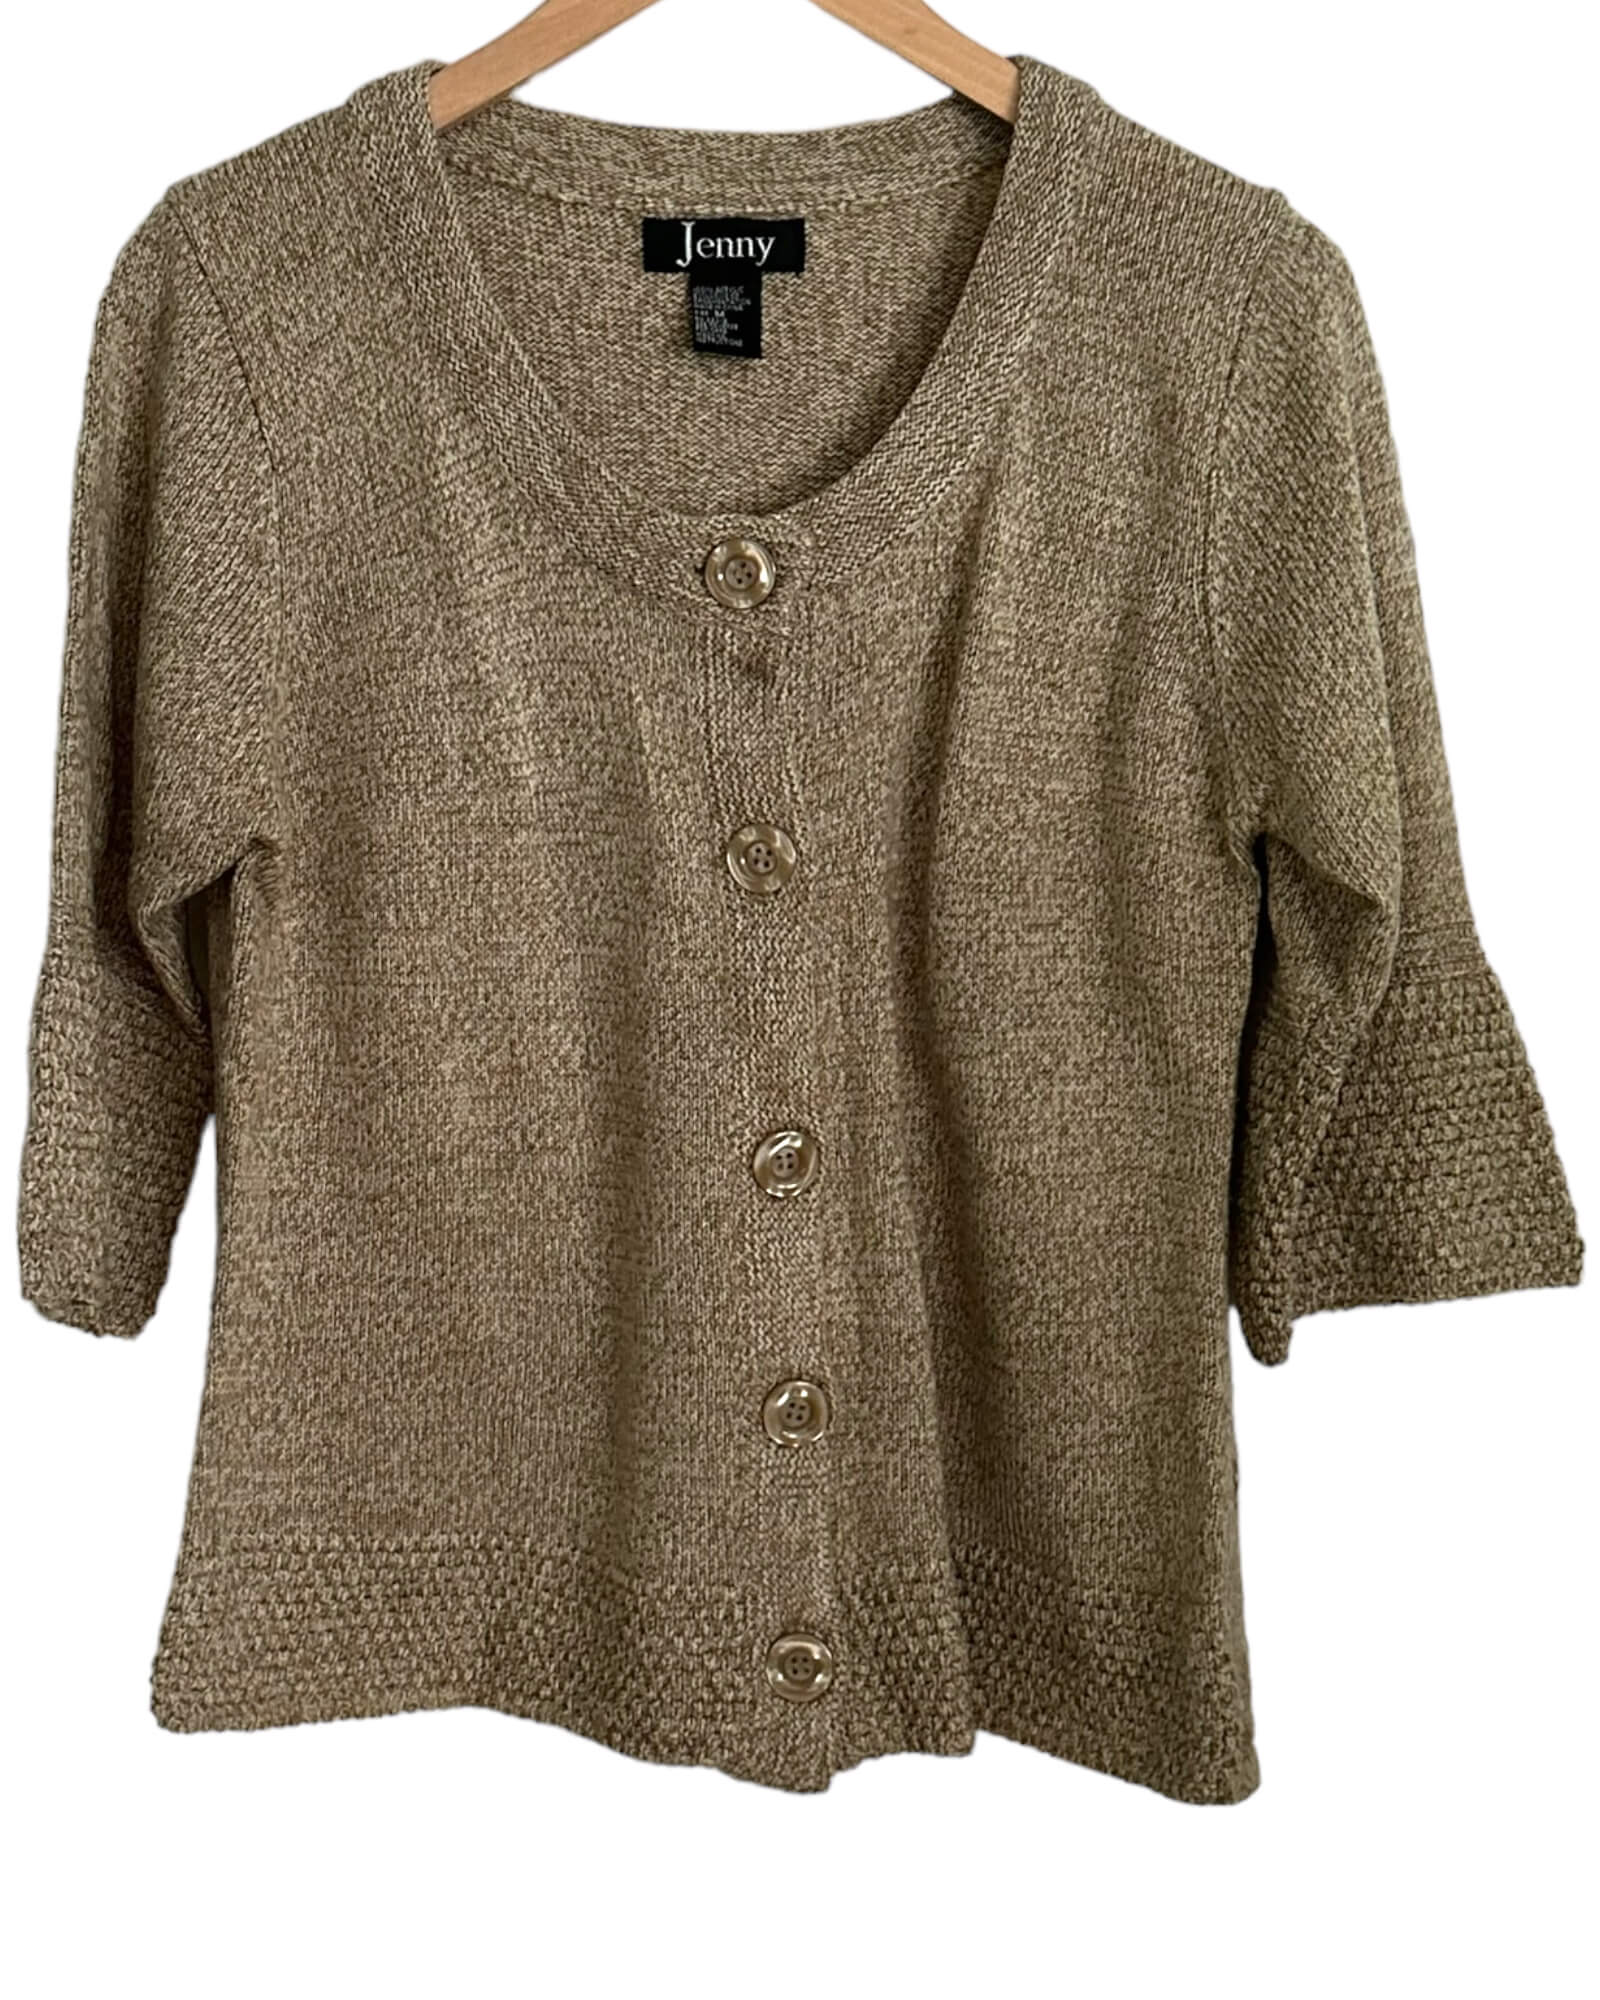 Soft Autumn JENNY contrast hem button front sweater 